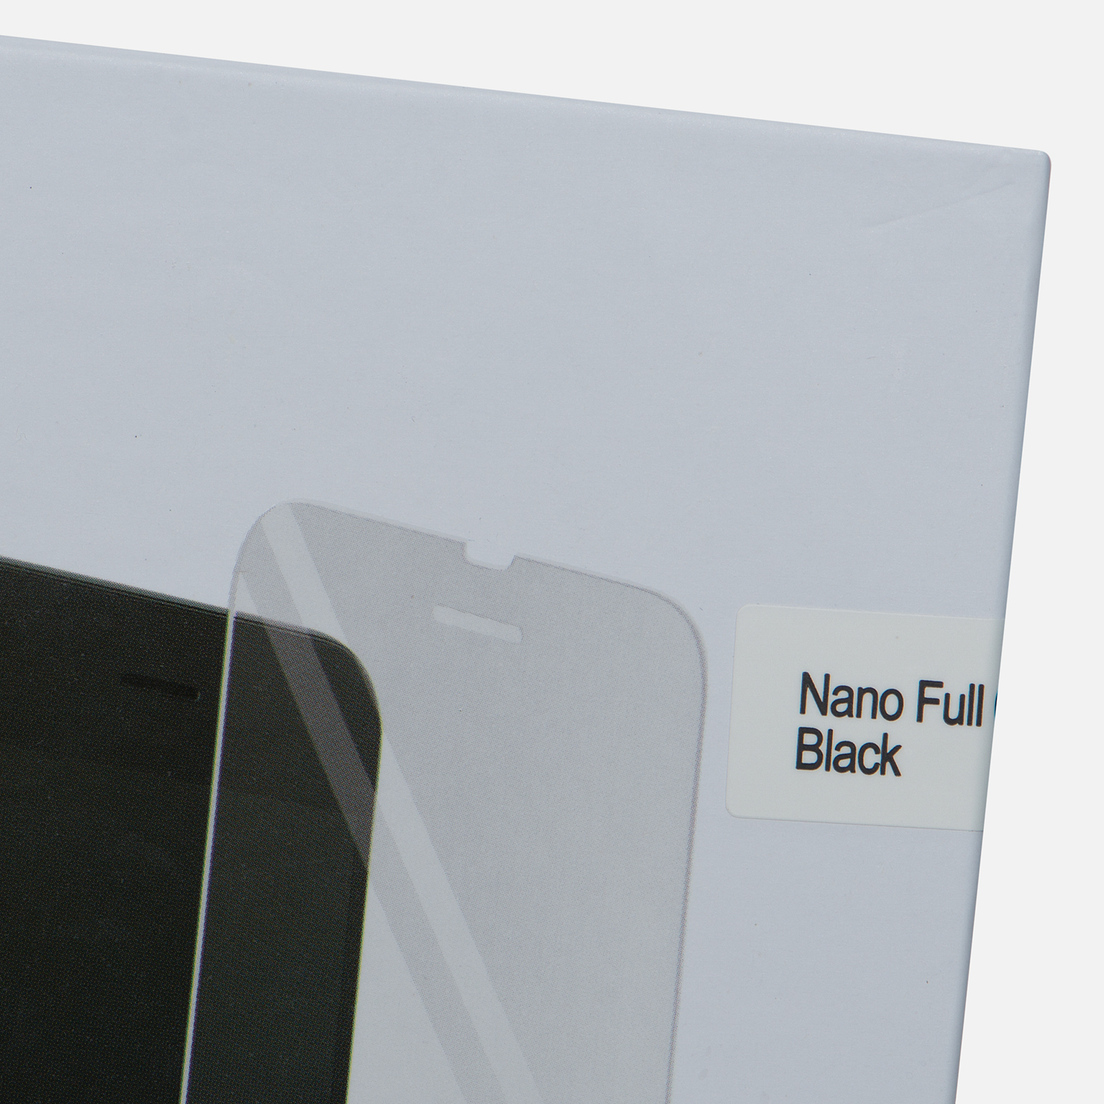 uBear Защитное стекло Nano Full Cover iPhone 7 Plus Premium 0.3mm